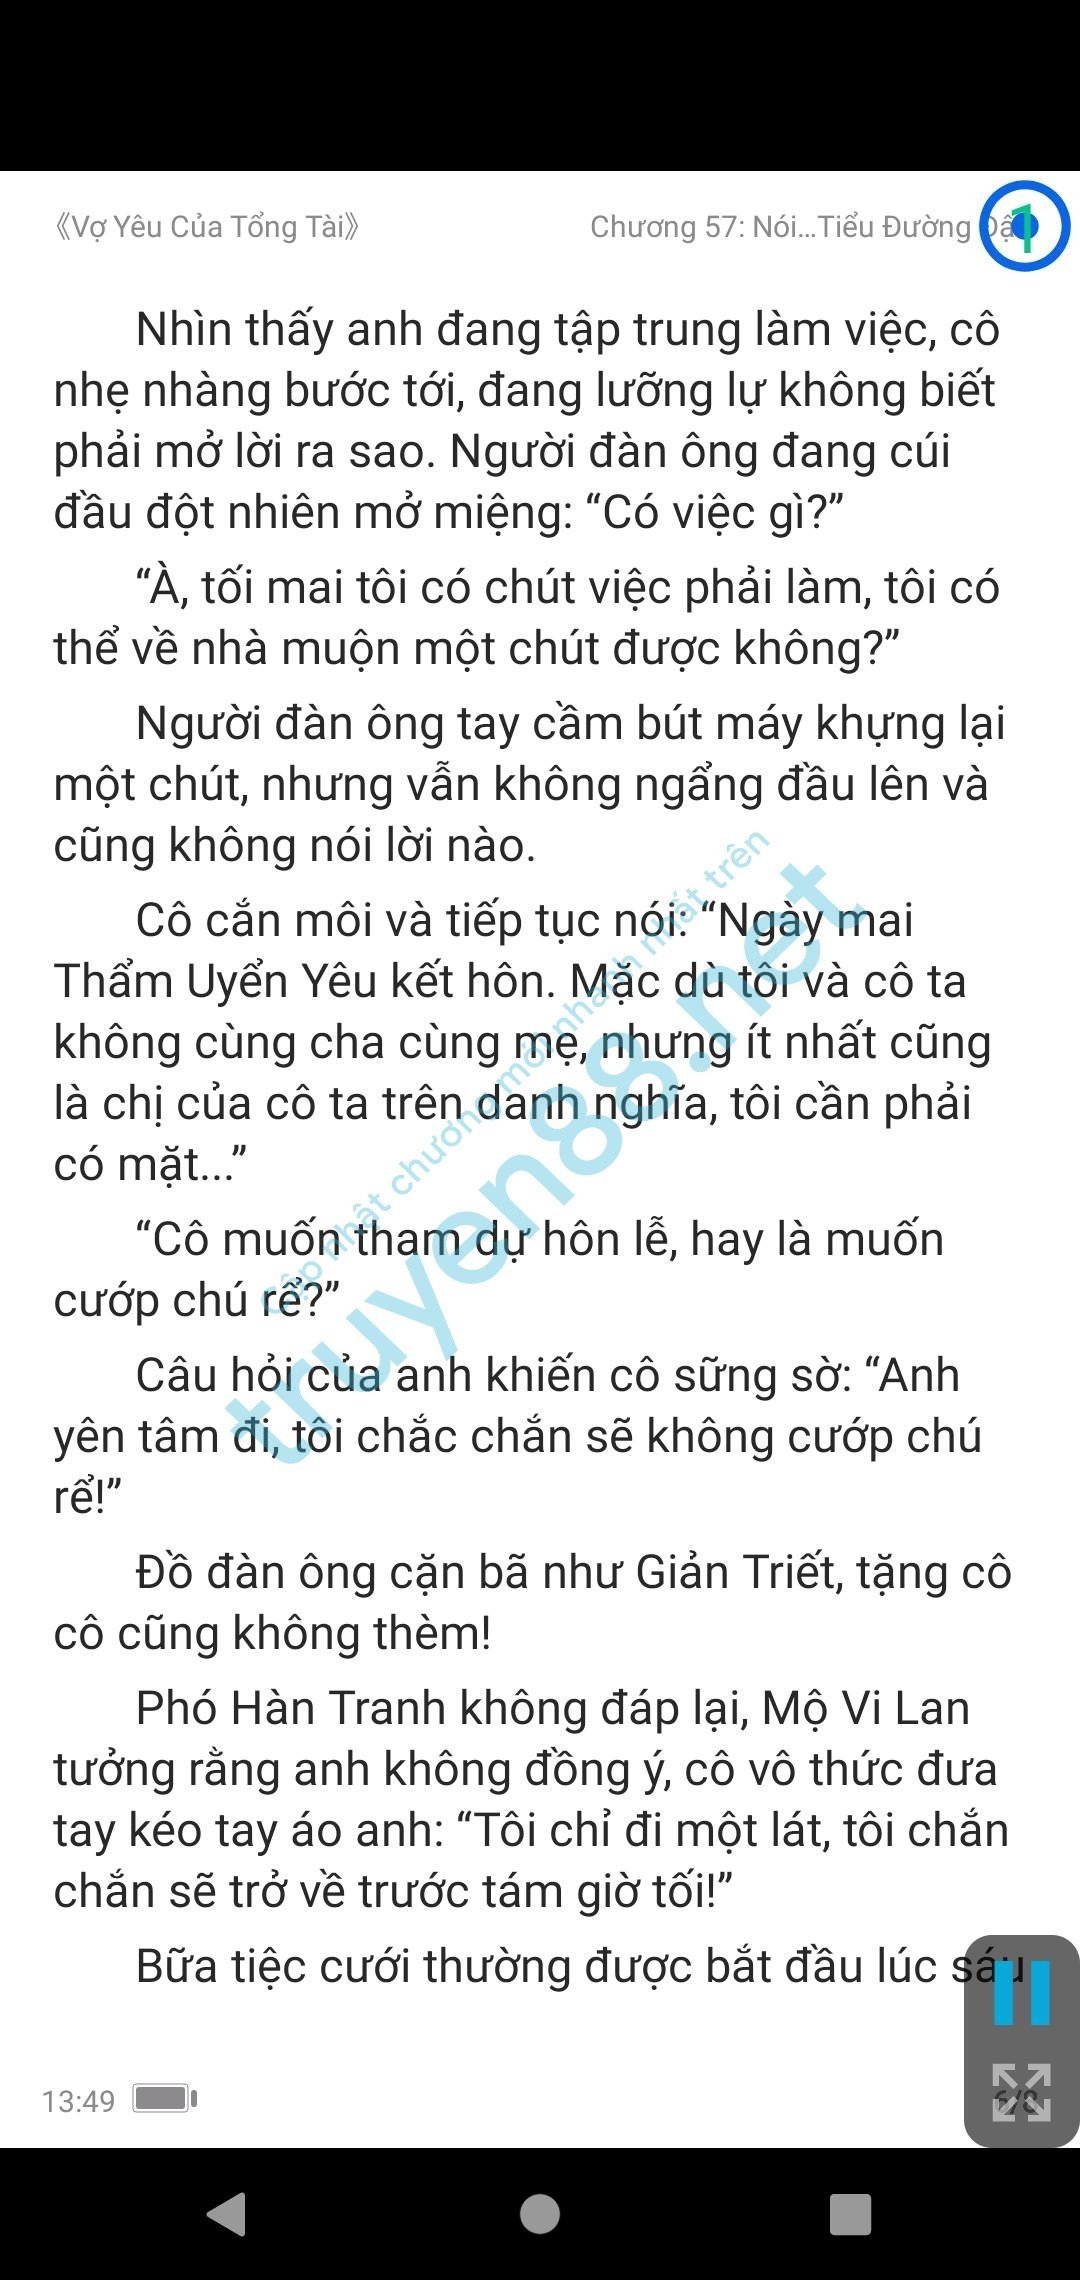 vo-yeu-cua-tong-tai-mo-vi-lan--pho-han-tranh-57-0